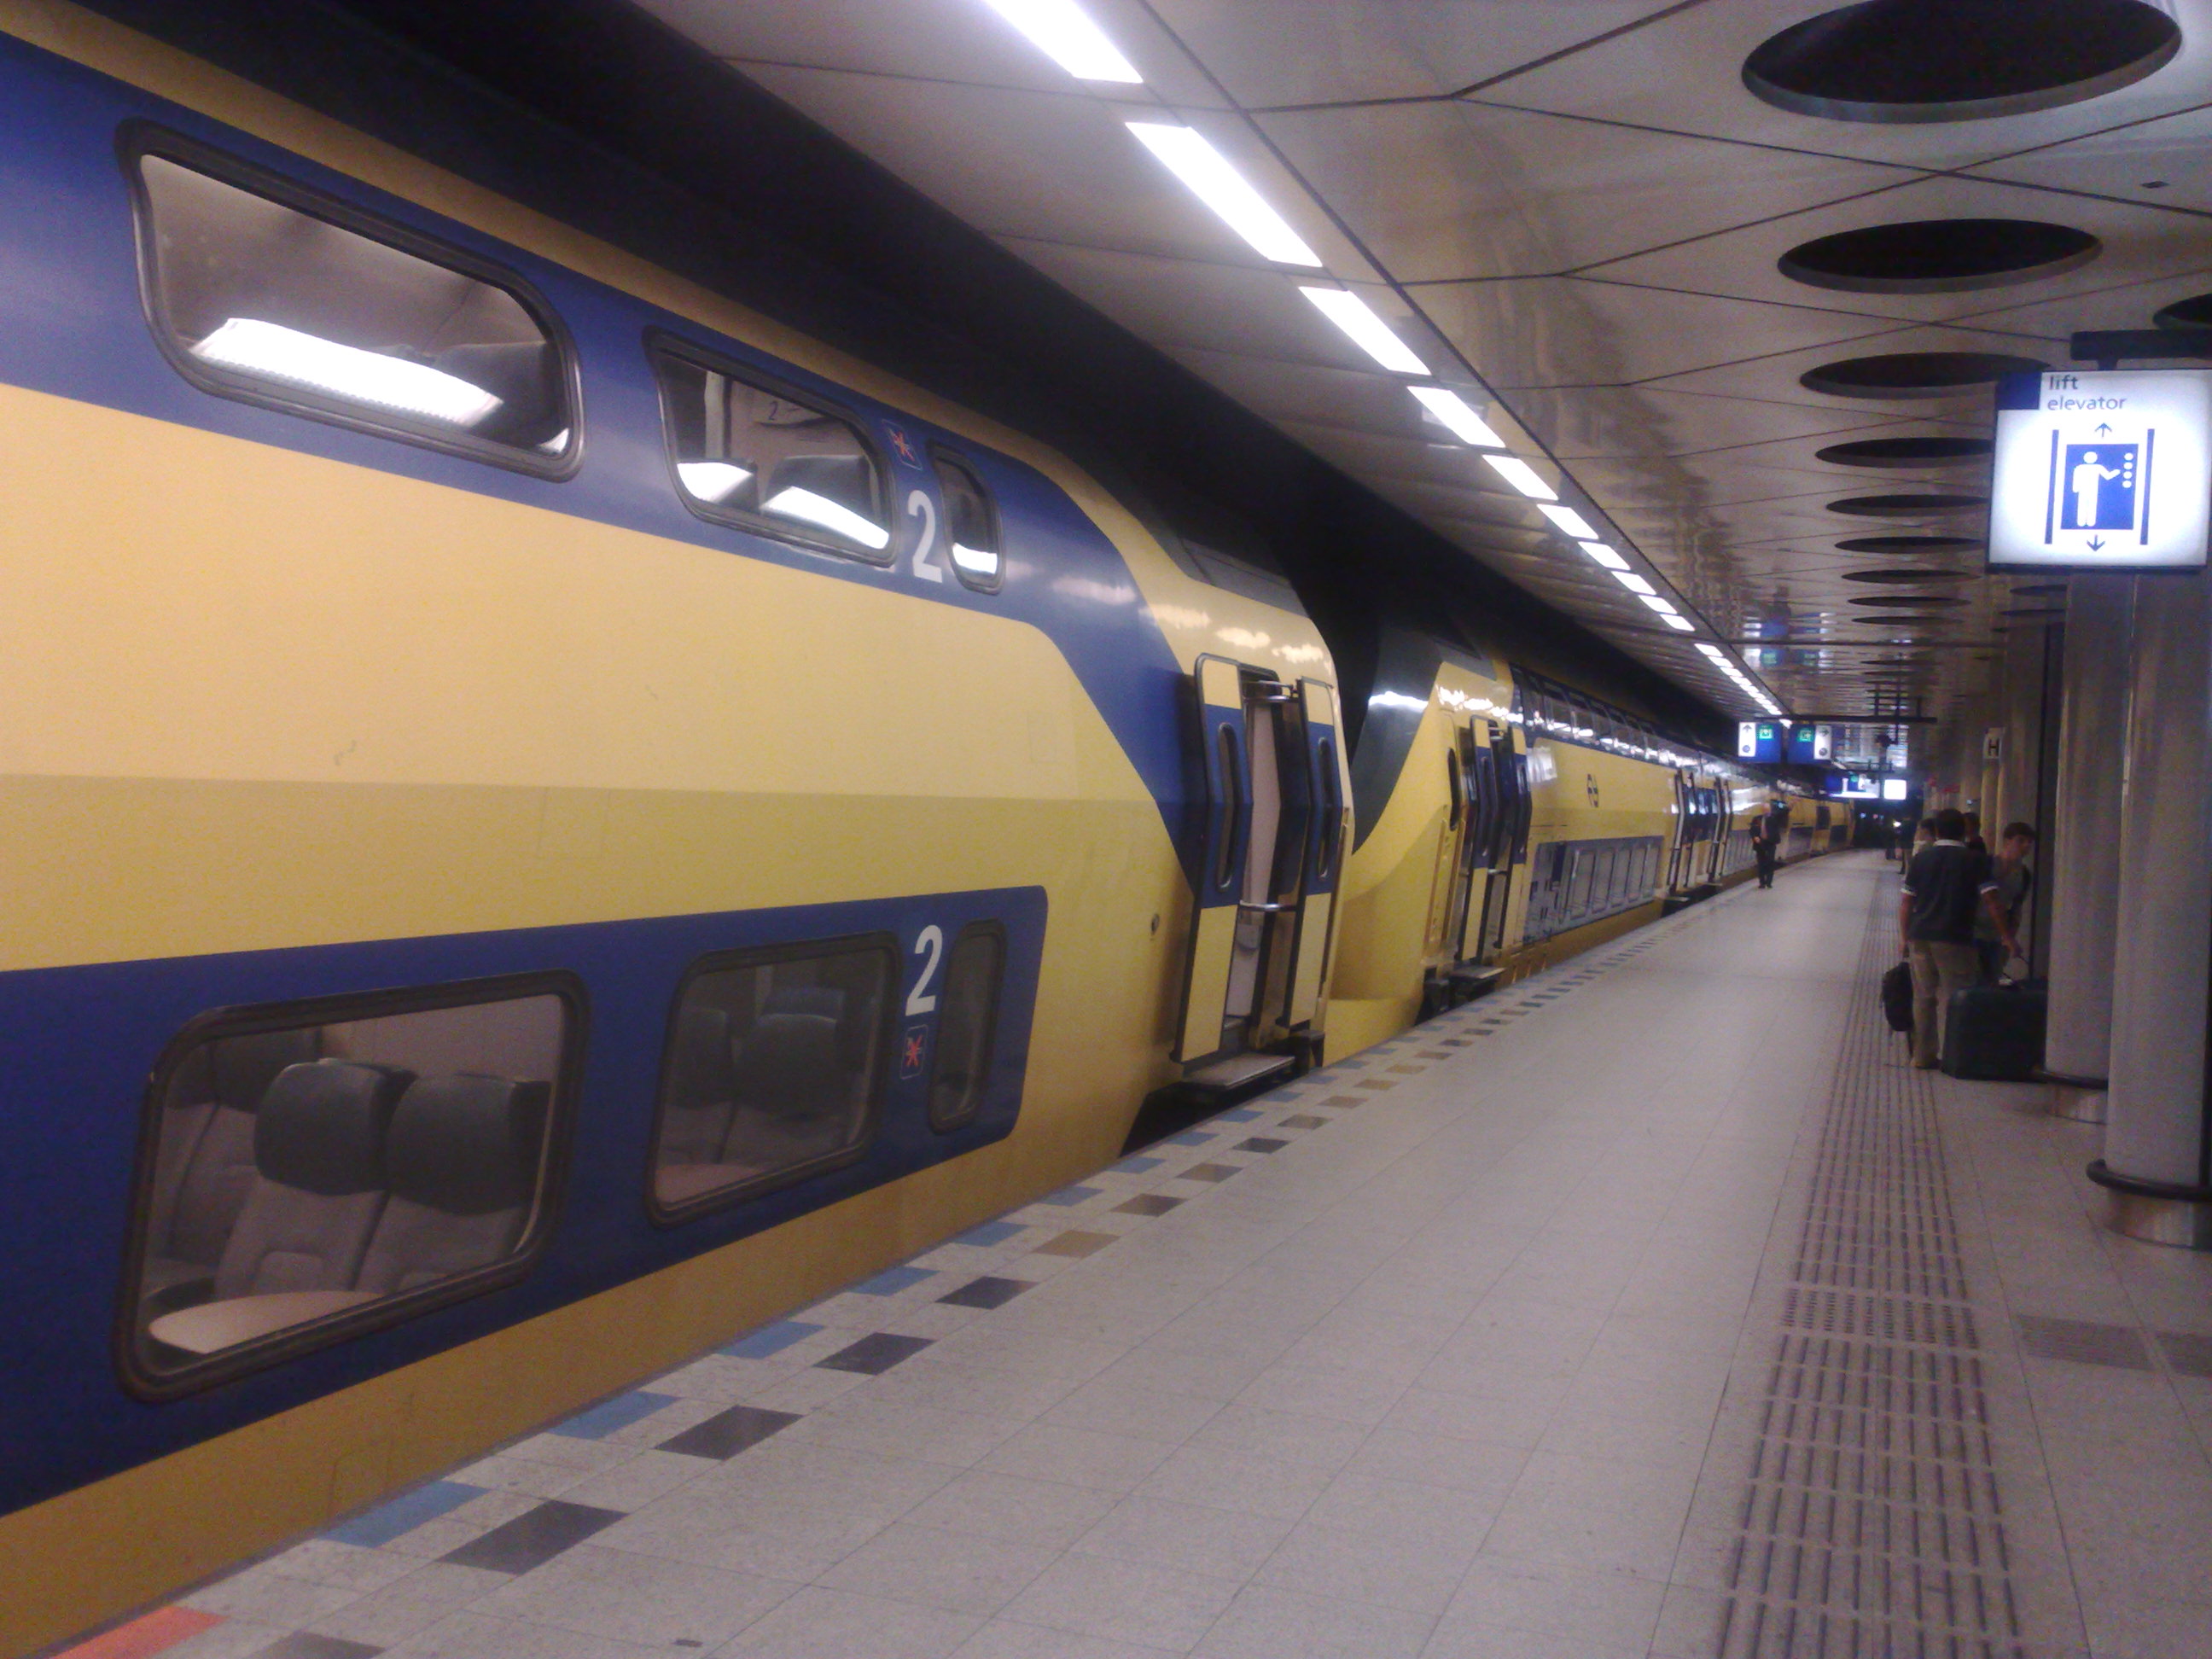 29/08/2011 - 8:00 - Schiphol Station